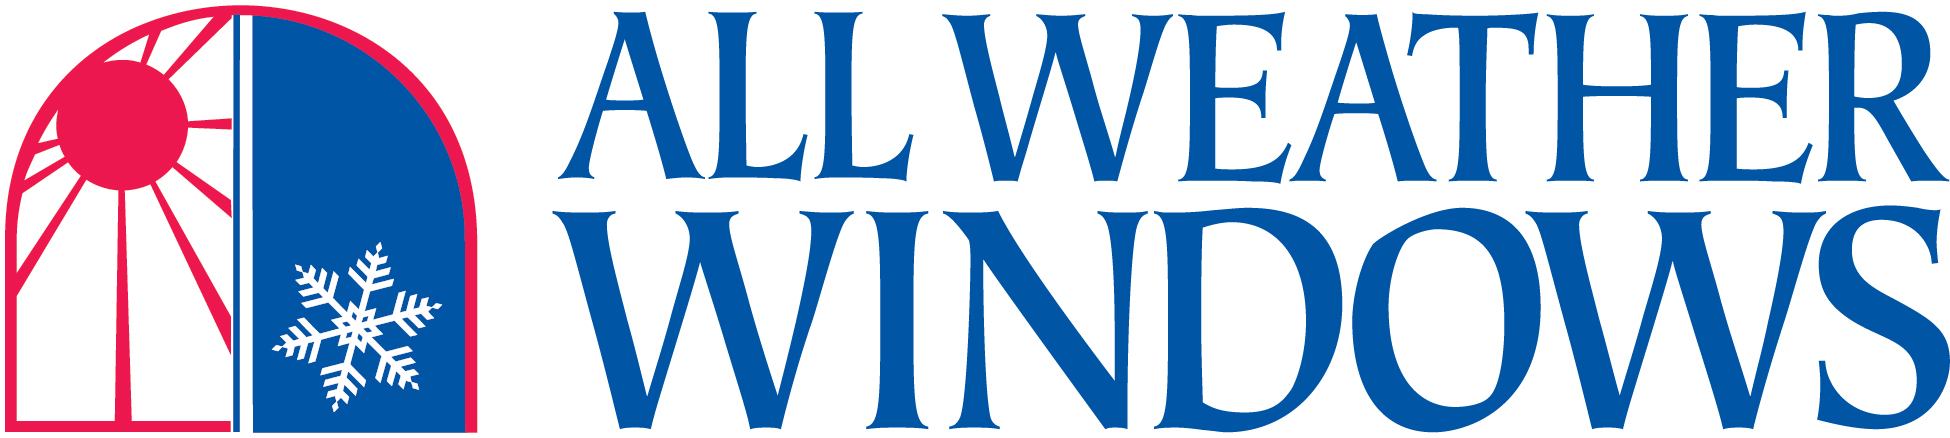 All Weather Windows Logo photo - 1